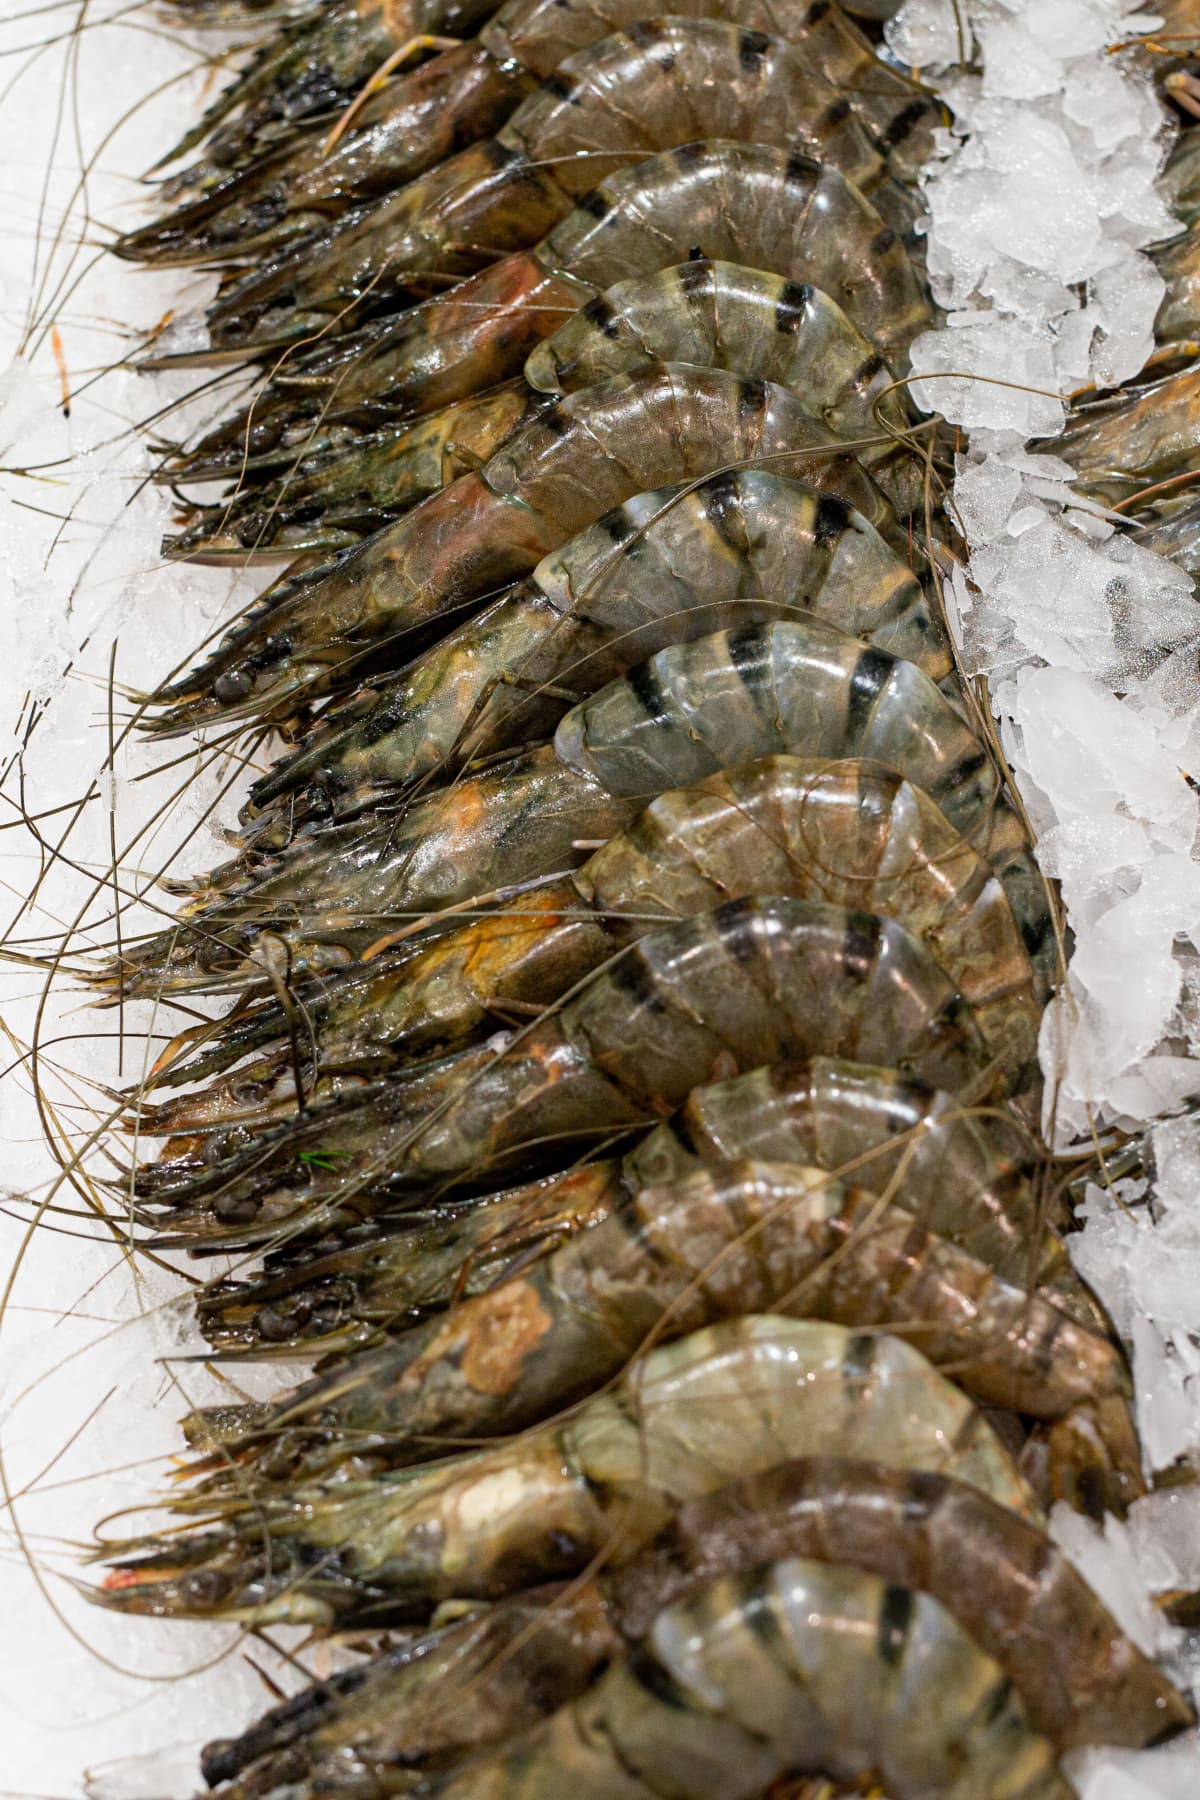 Raw shrimp on display at a food market. 